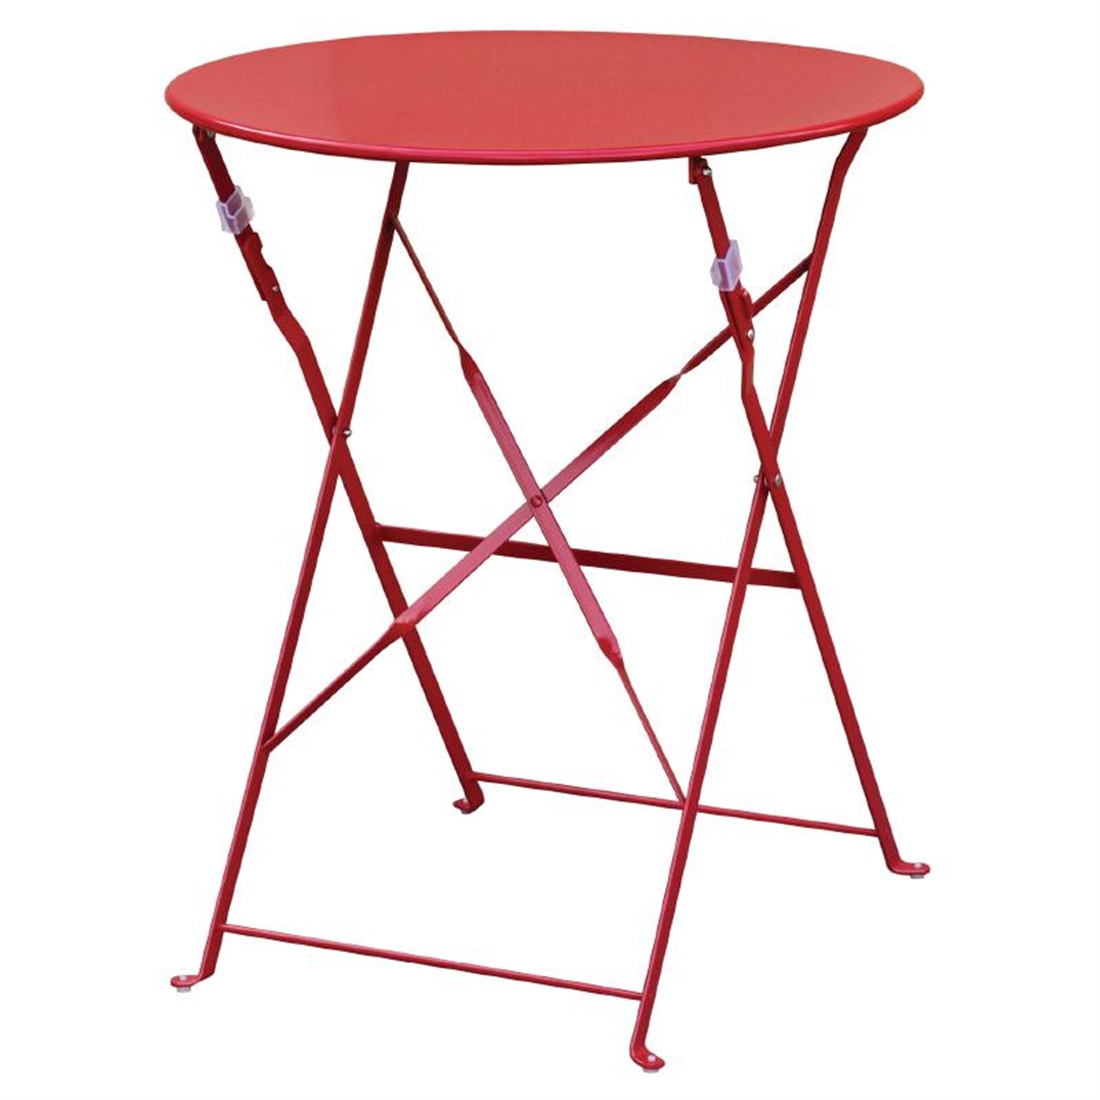 Bolero Red Pavement Style Steel Table 595mm by Bolero-GH560 - Smart ...